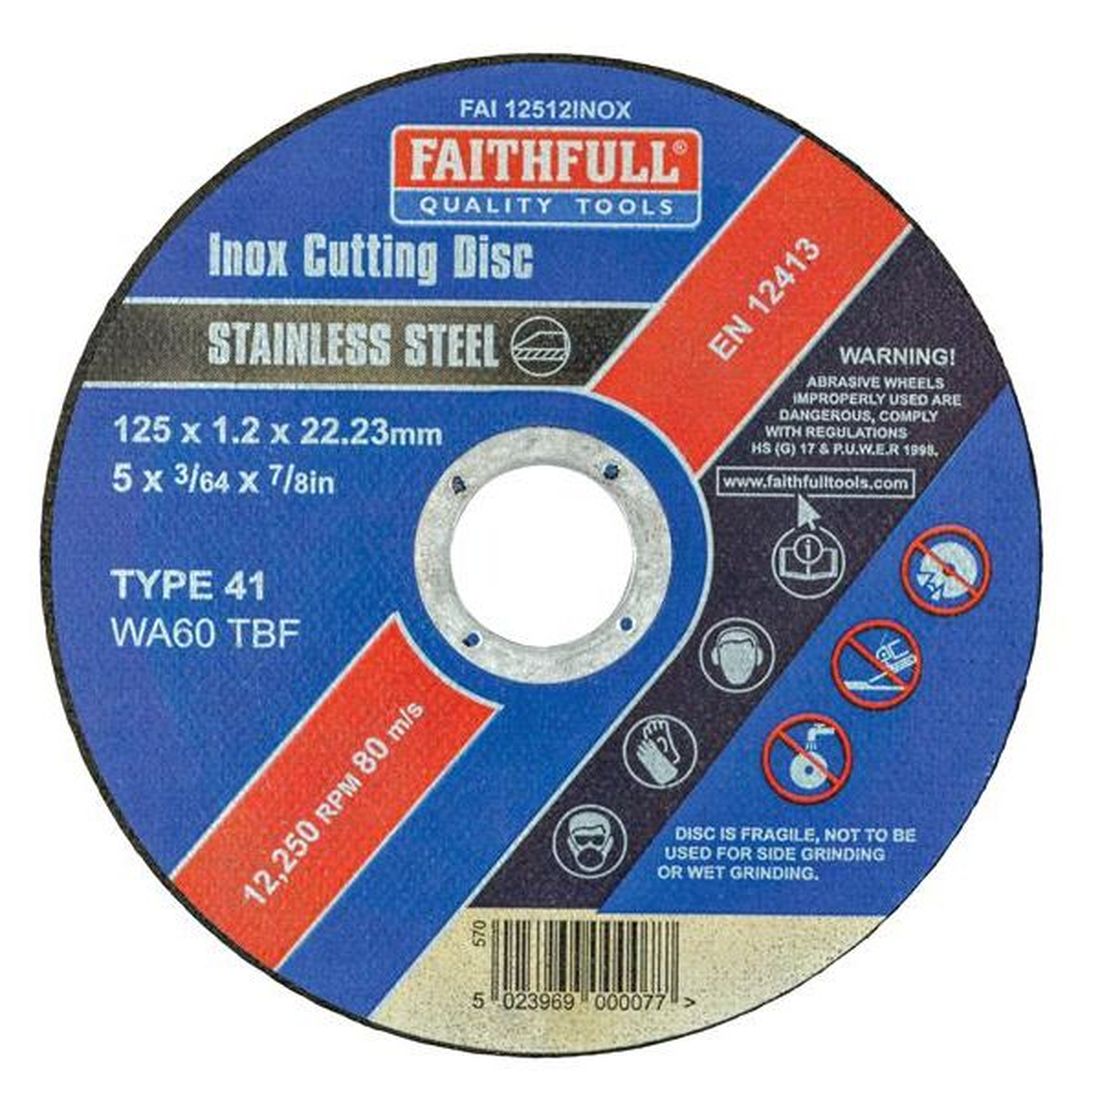 Faithfull Inox Cutting Disc 125 x 1.2 x 22.23mm                                           